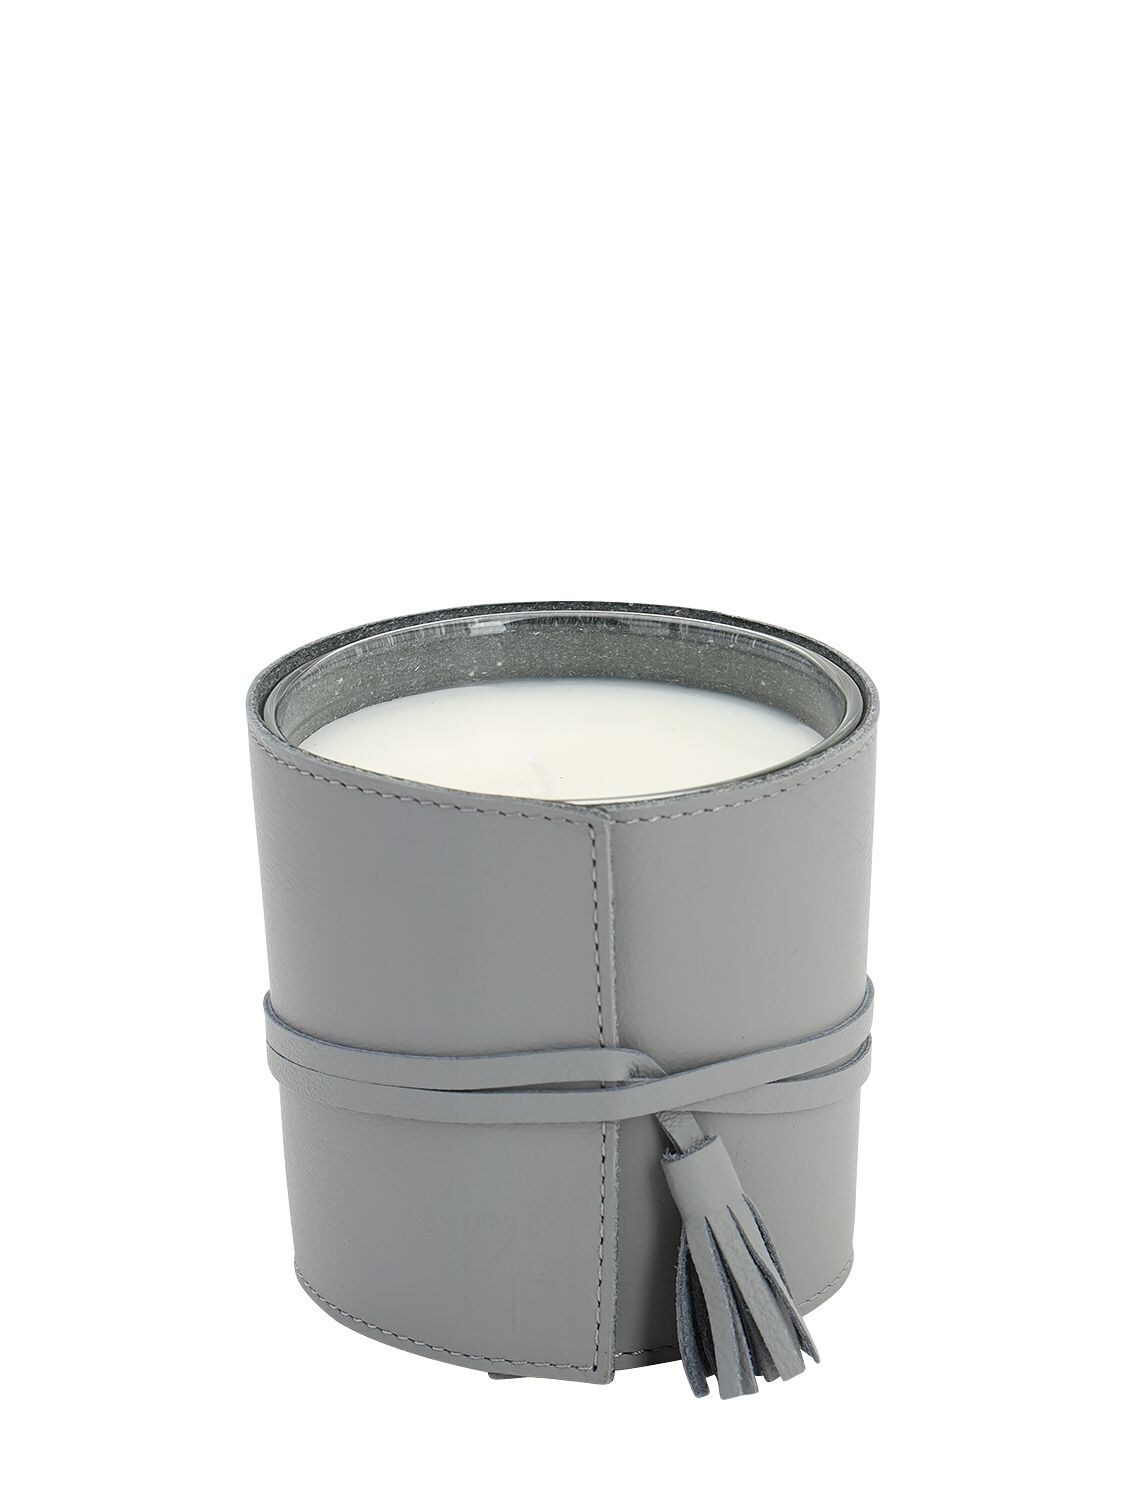 Armani/casa Large Ora Grey Candle